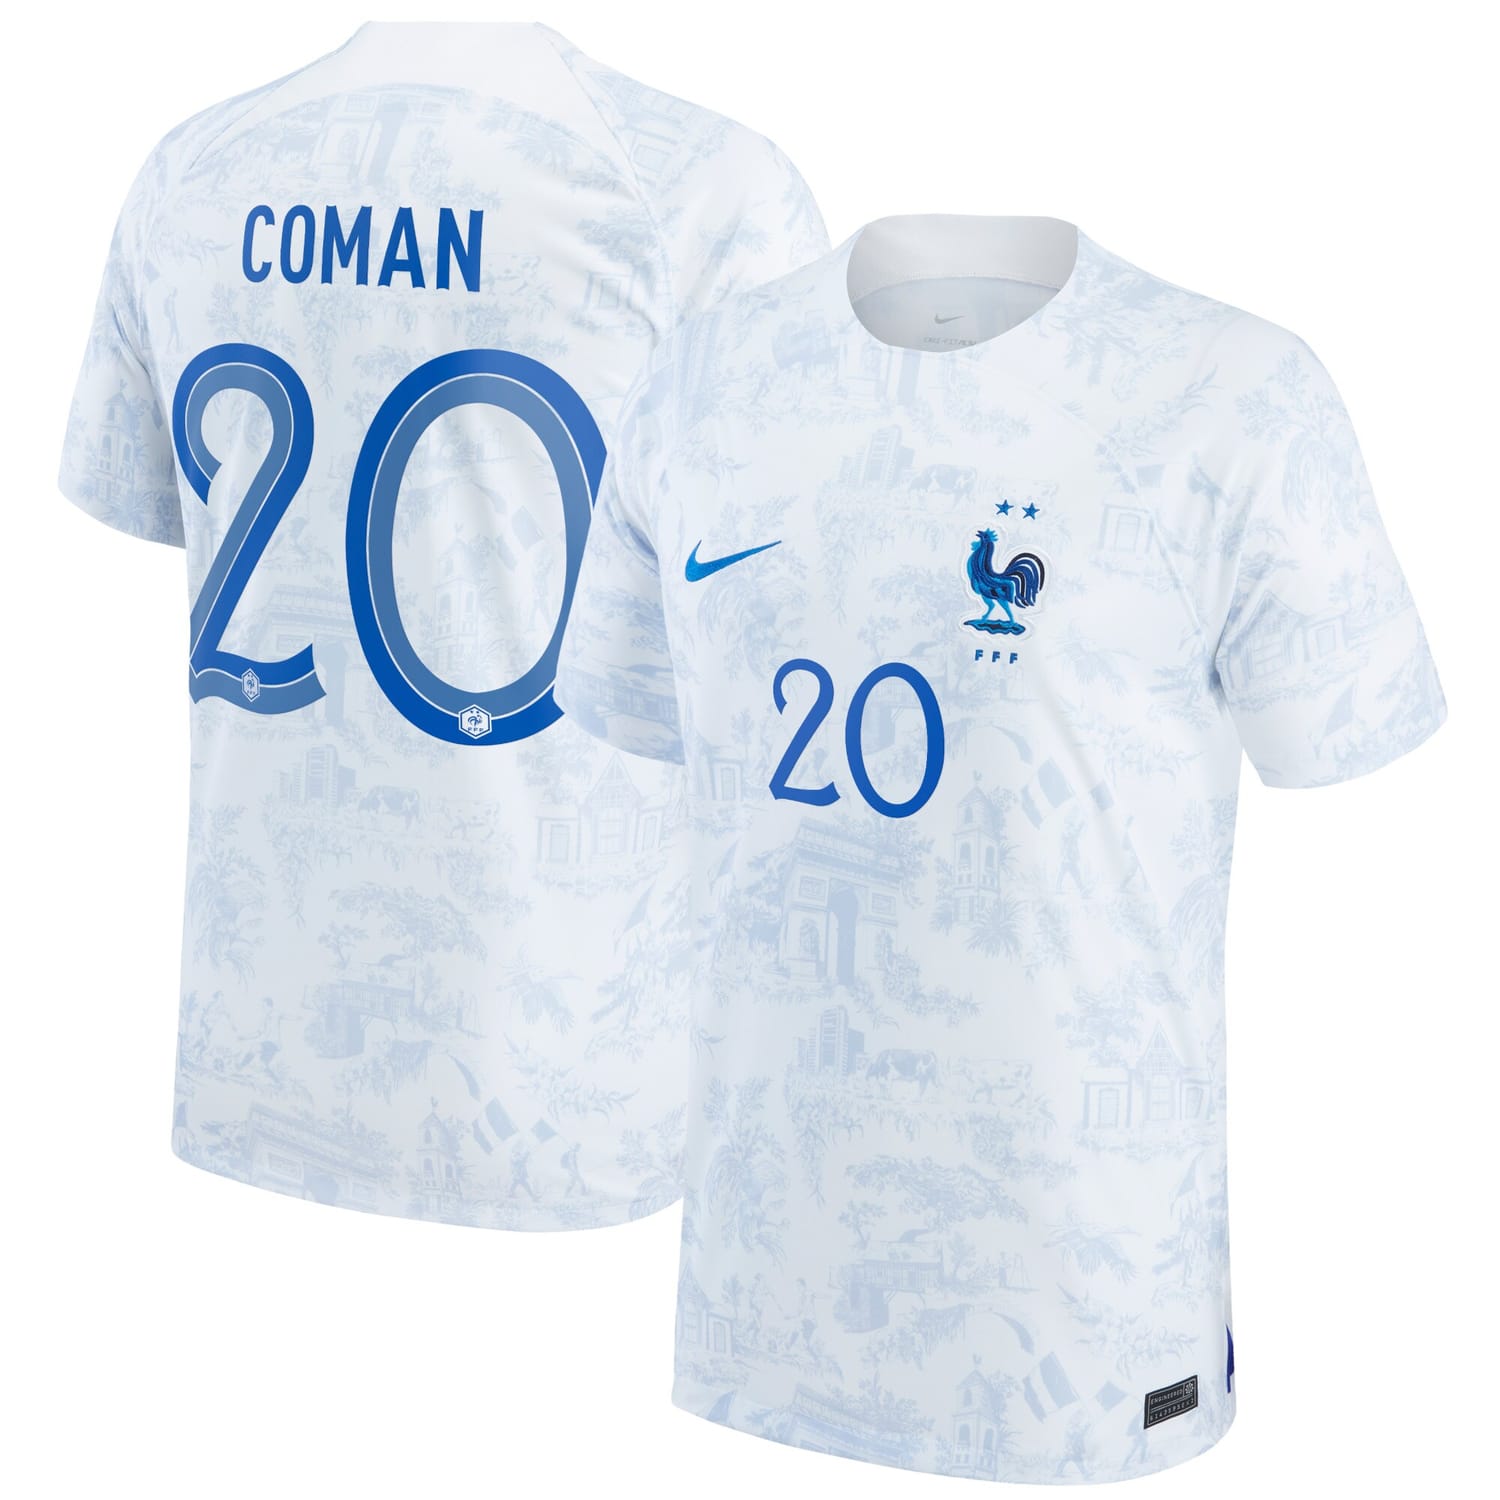 France National Team Away Jersey Shirt 2022 player Kingsley Coman printing for Men